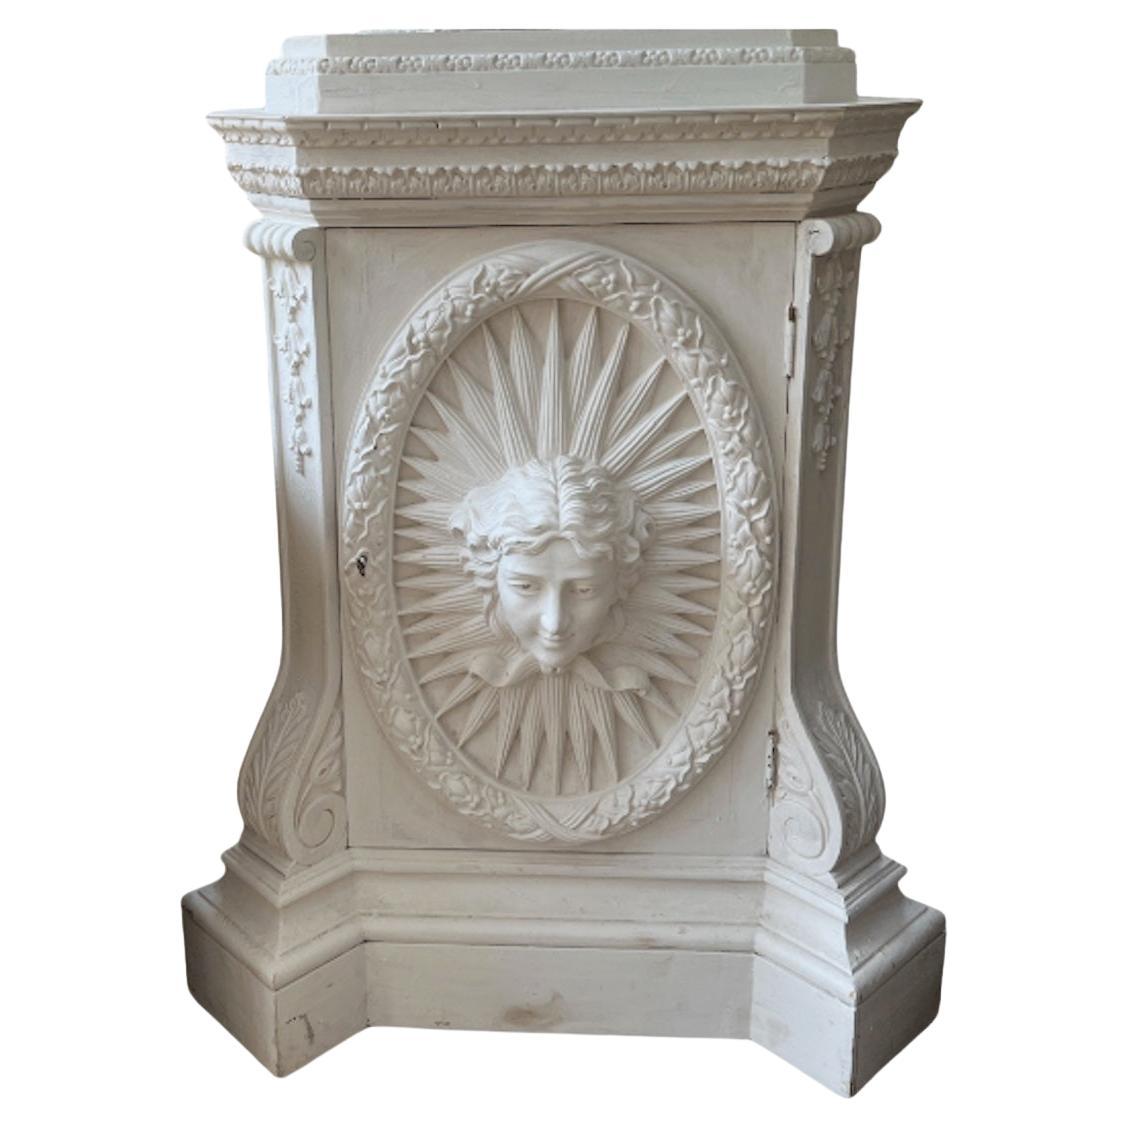 The William Kent Apollo Pedestal For Sale